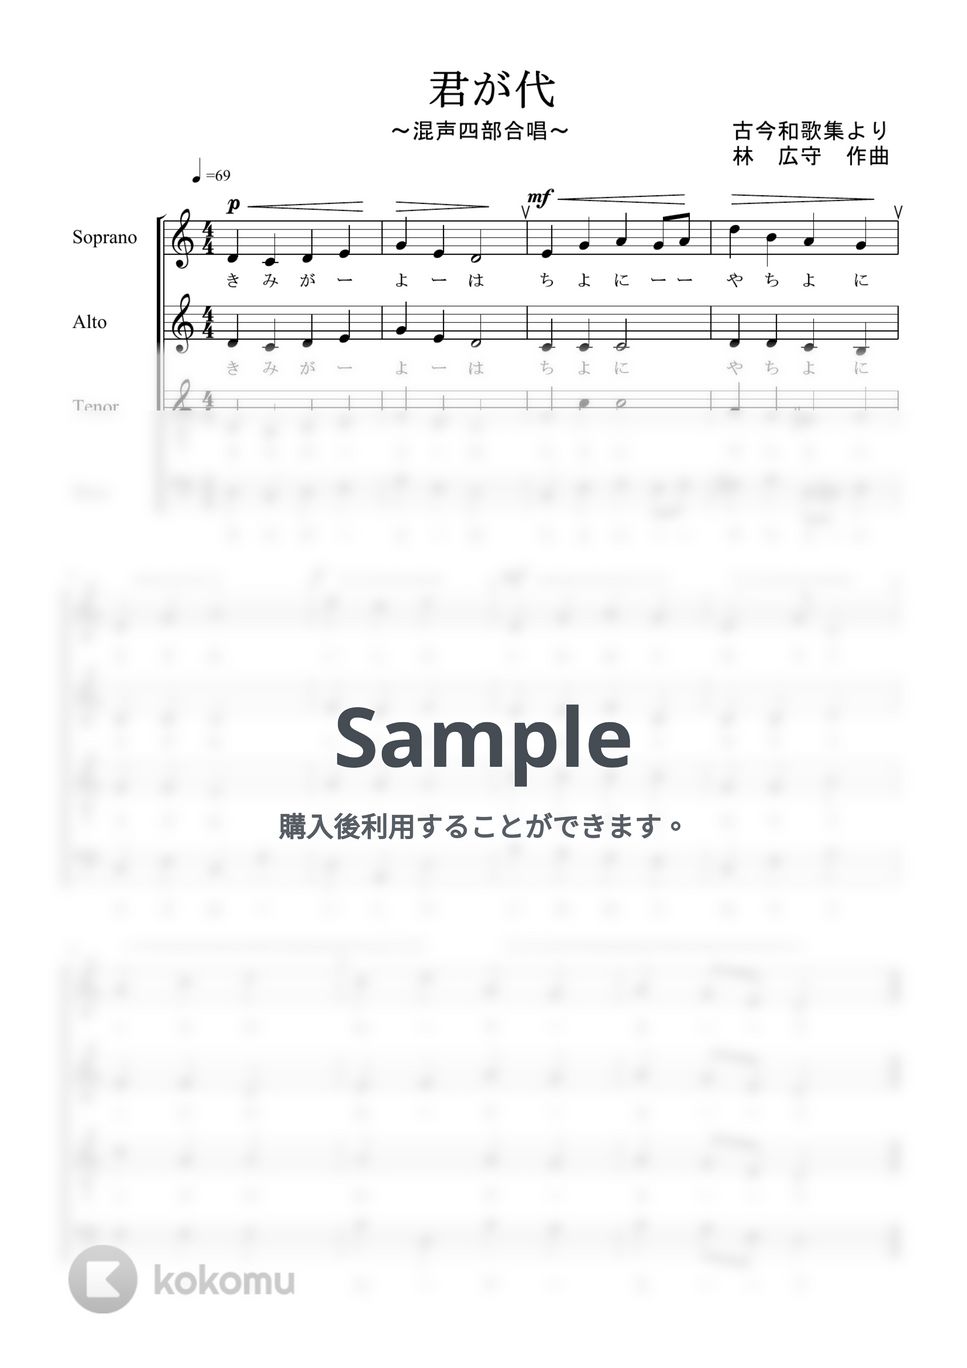 国歌 - 君が代 (混声四部合唱) by kiminabe